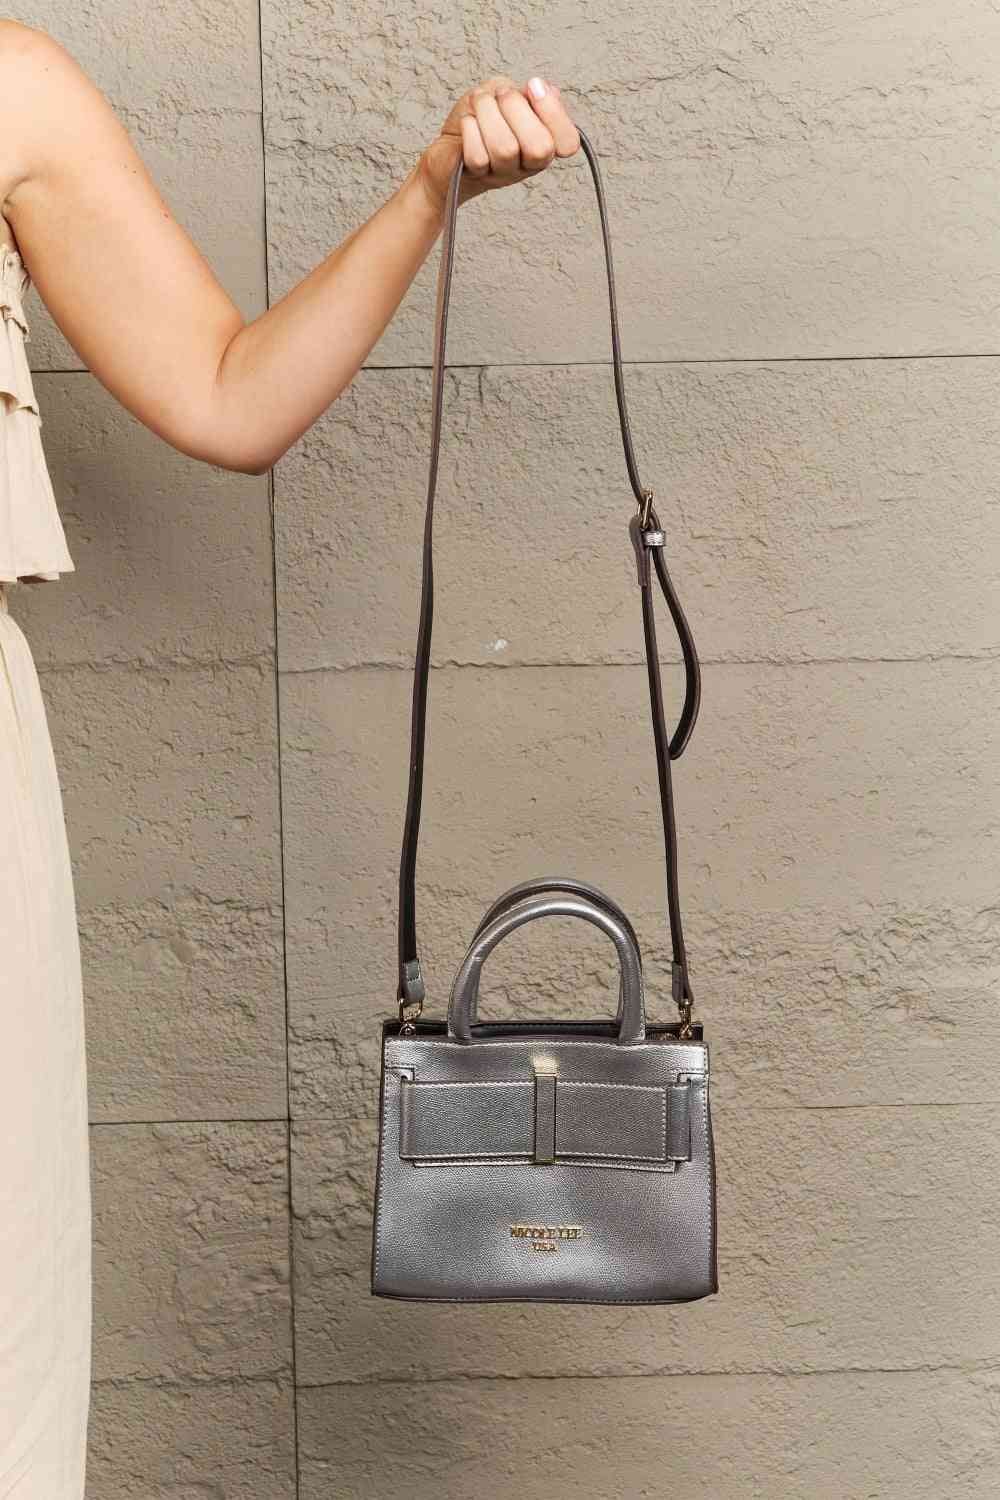 Nicole Lee USA Regina 3-Piece Satchel Bag Set - TiffanyzKlozet